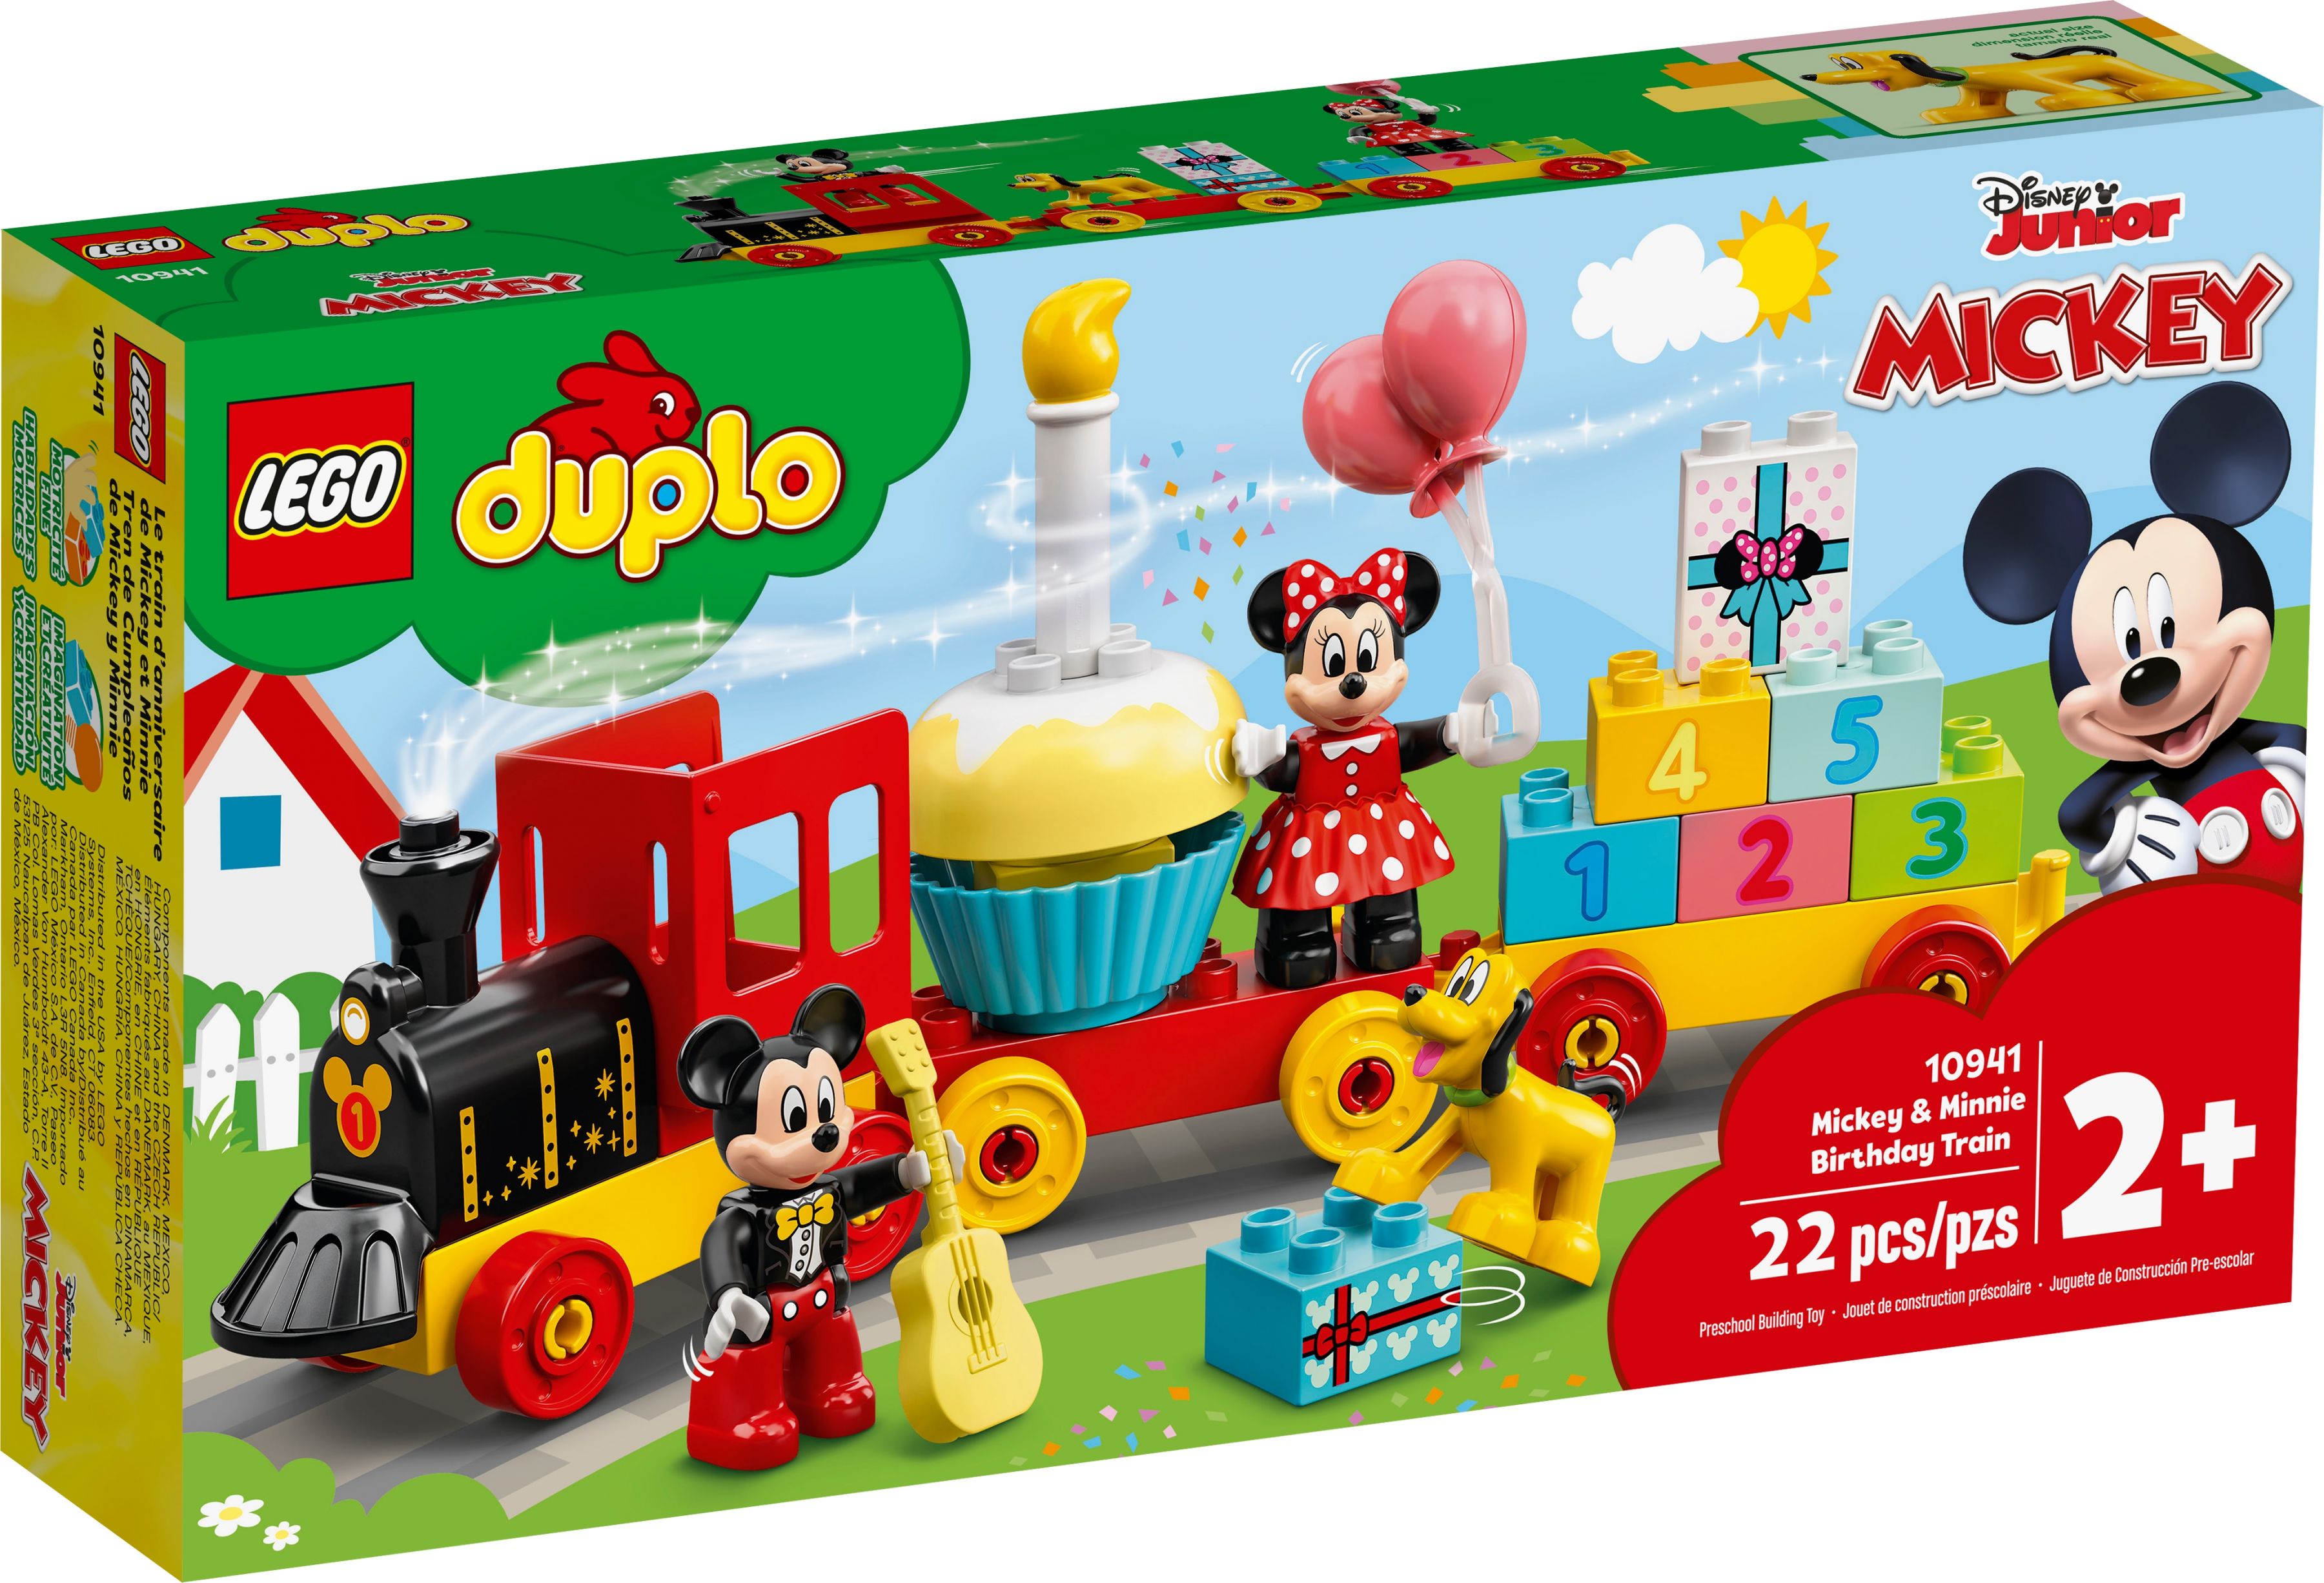 LEGO Duplo 10941 Mickys und Minnies Geburtstagszug LEGO_10941_box1_v39.jpg